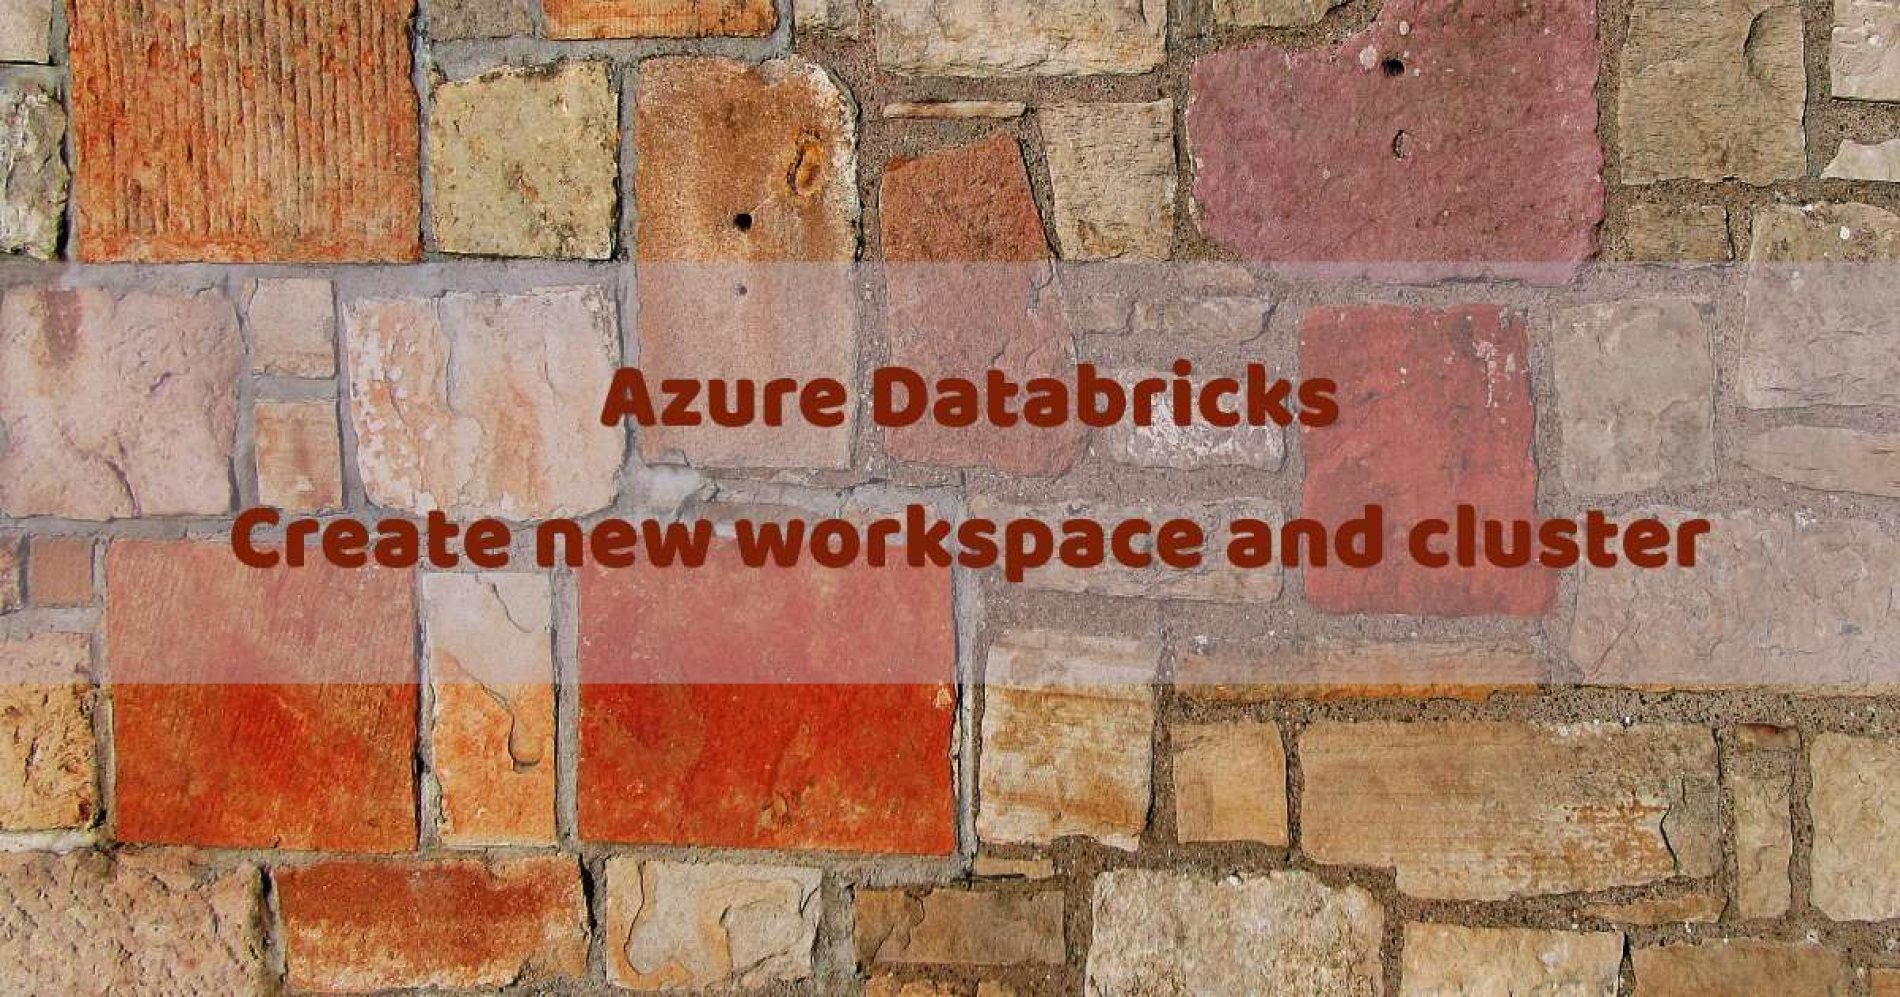 Azure Databricks – create new workspace and cluster